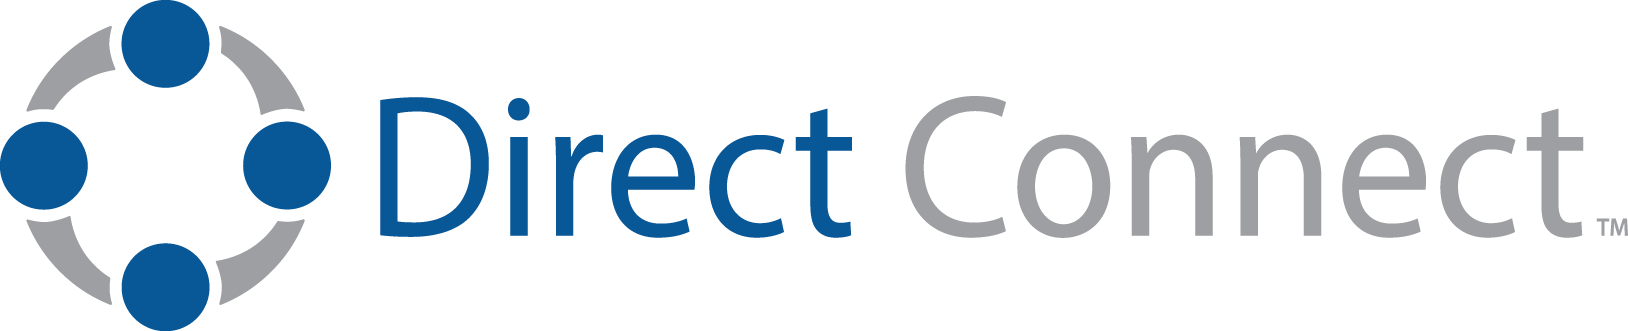 Direct connect. Директ Коннект что это. Direct service лого. Connect logo. Directly connected